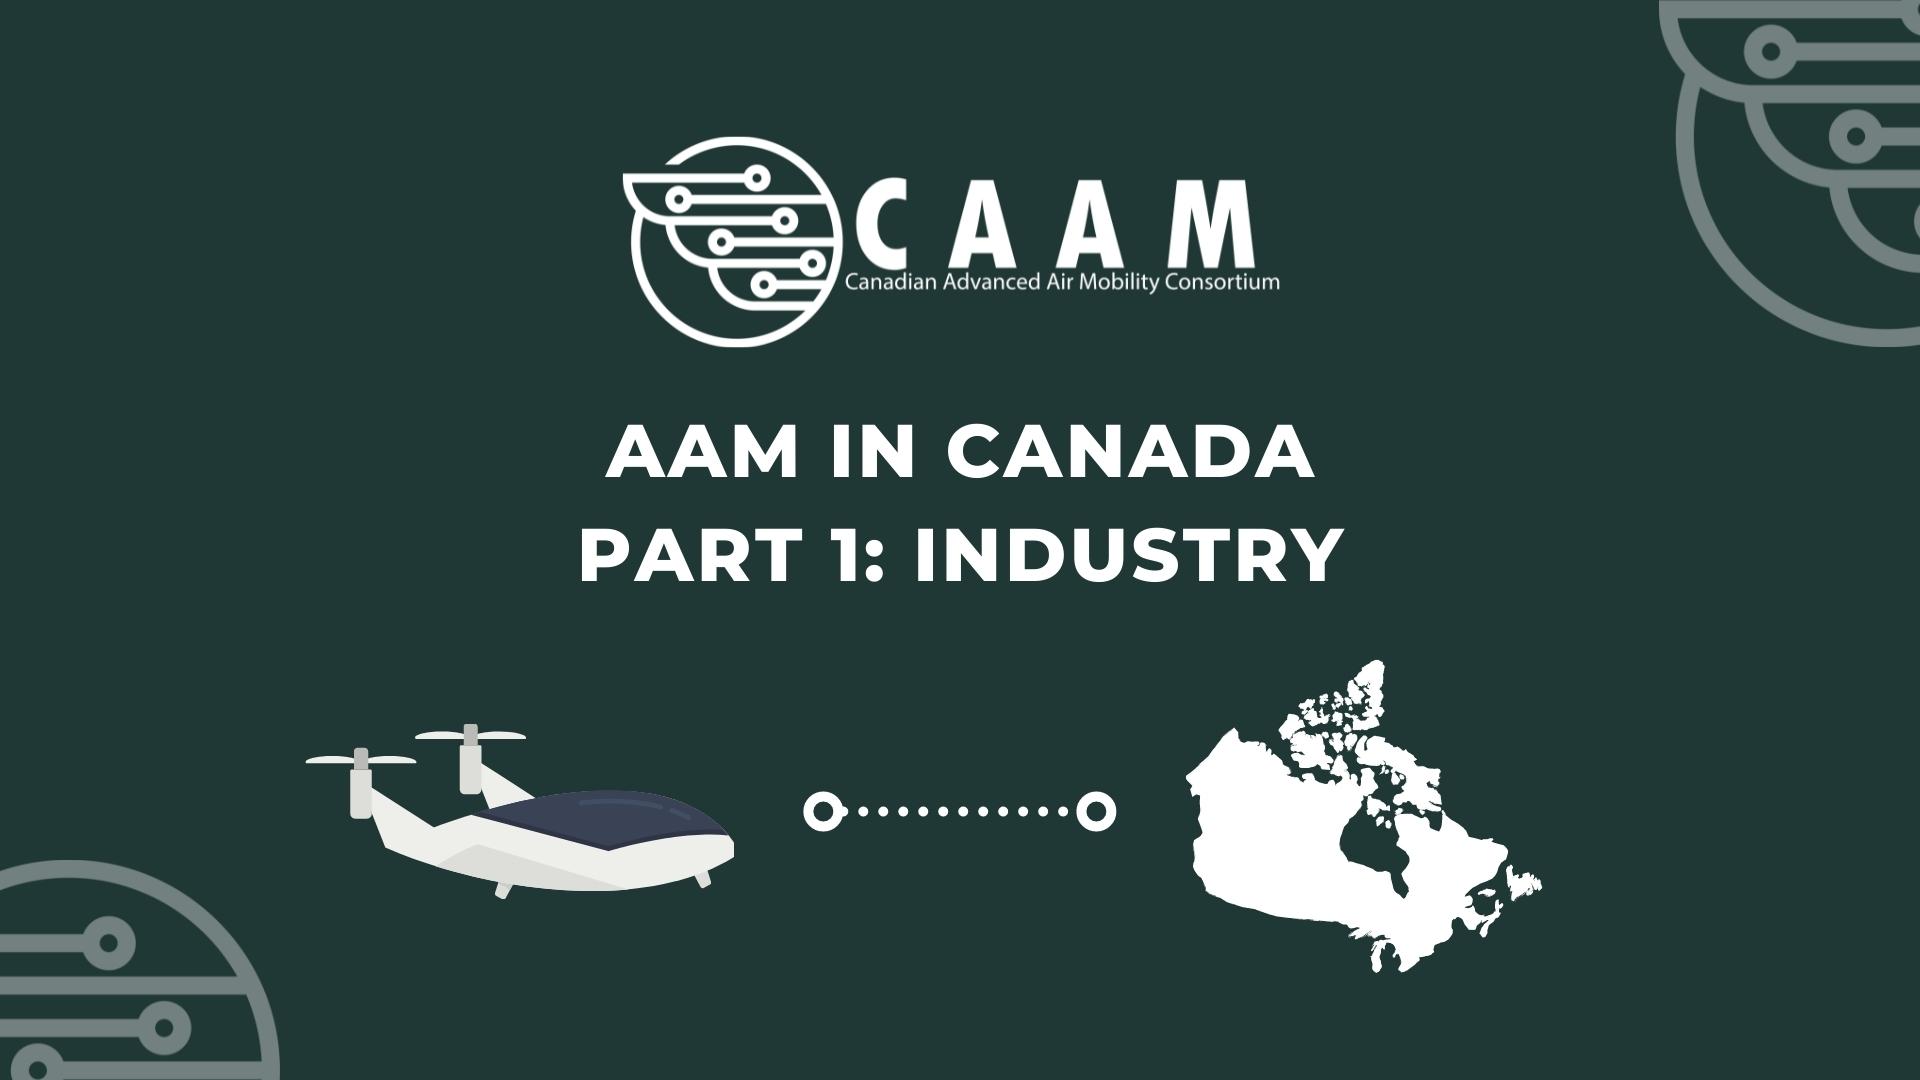 AAM IN CANADA - PART 1, INDUSTRY